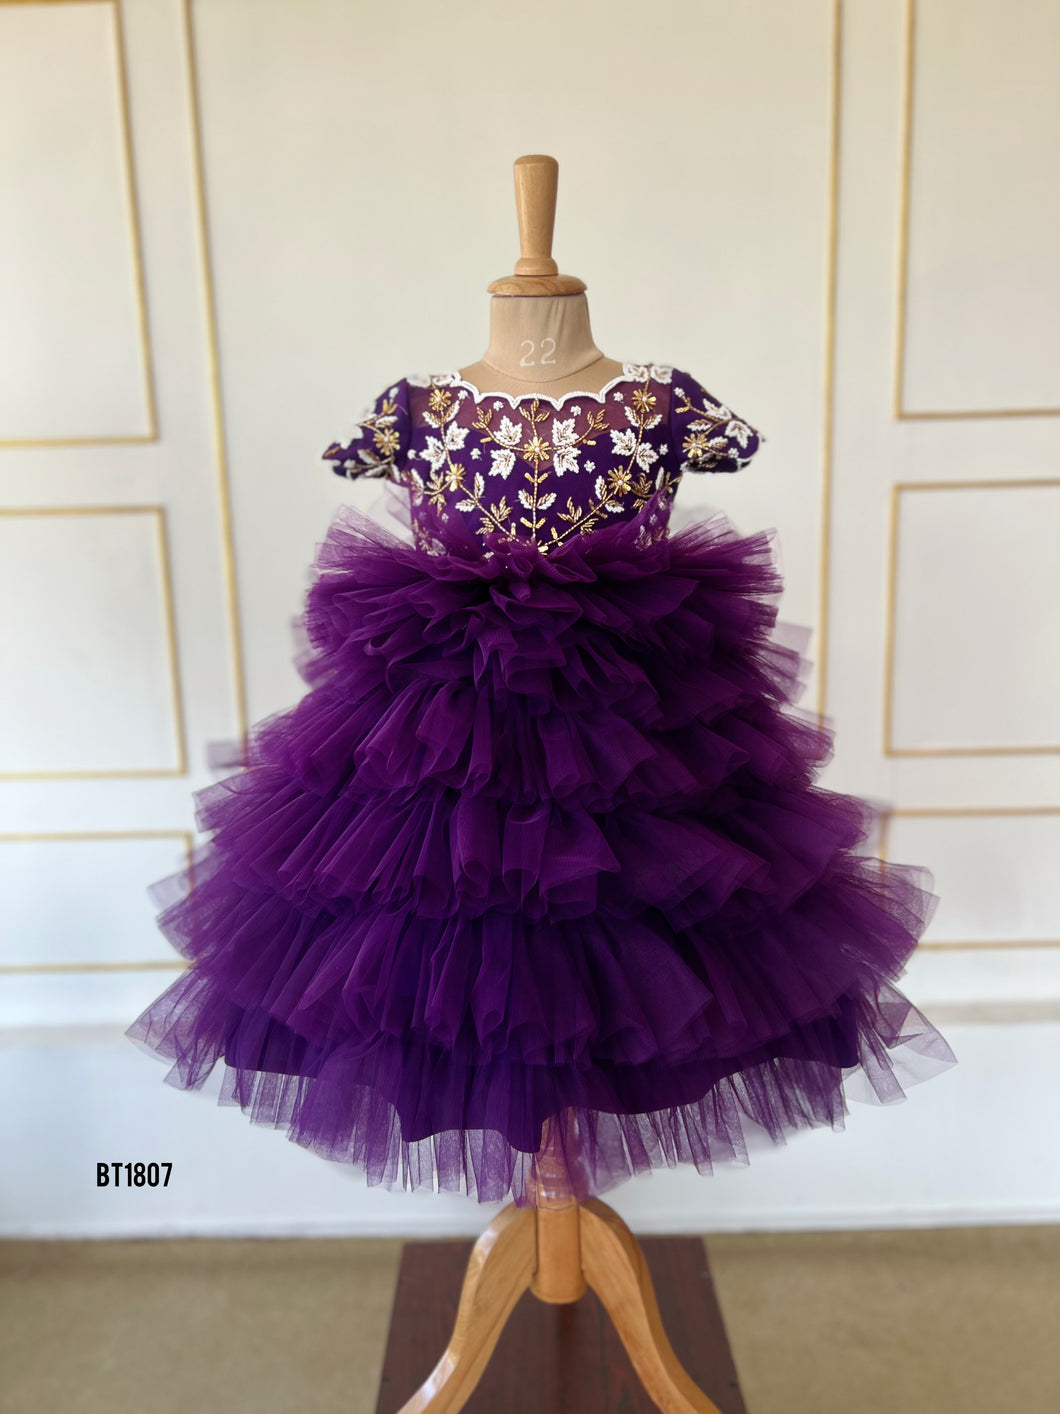 BT1807 Twilight Twirl: Royal Purple Tulle Princess Dress